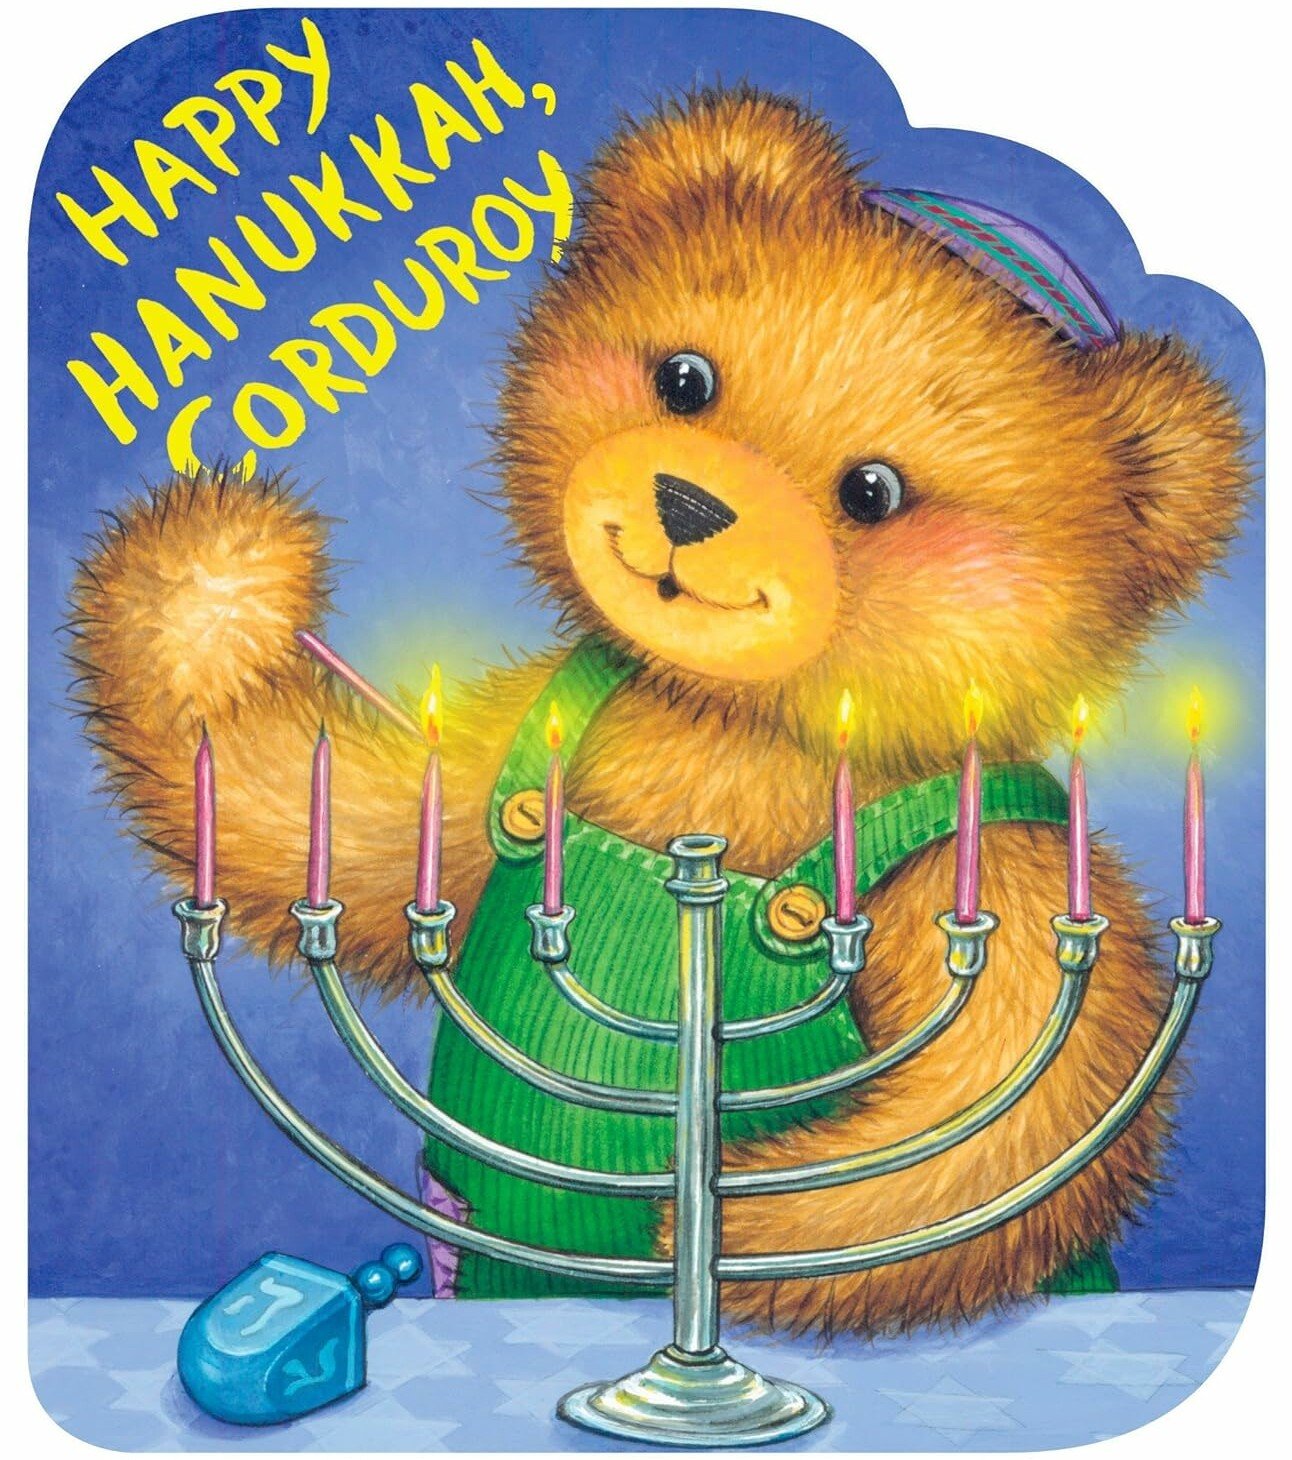 "Happy Hanukkah, Corduroy" by Don Freeman